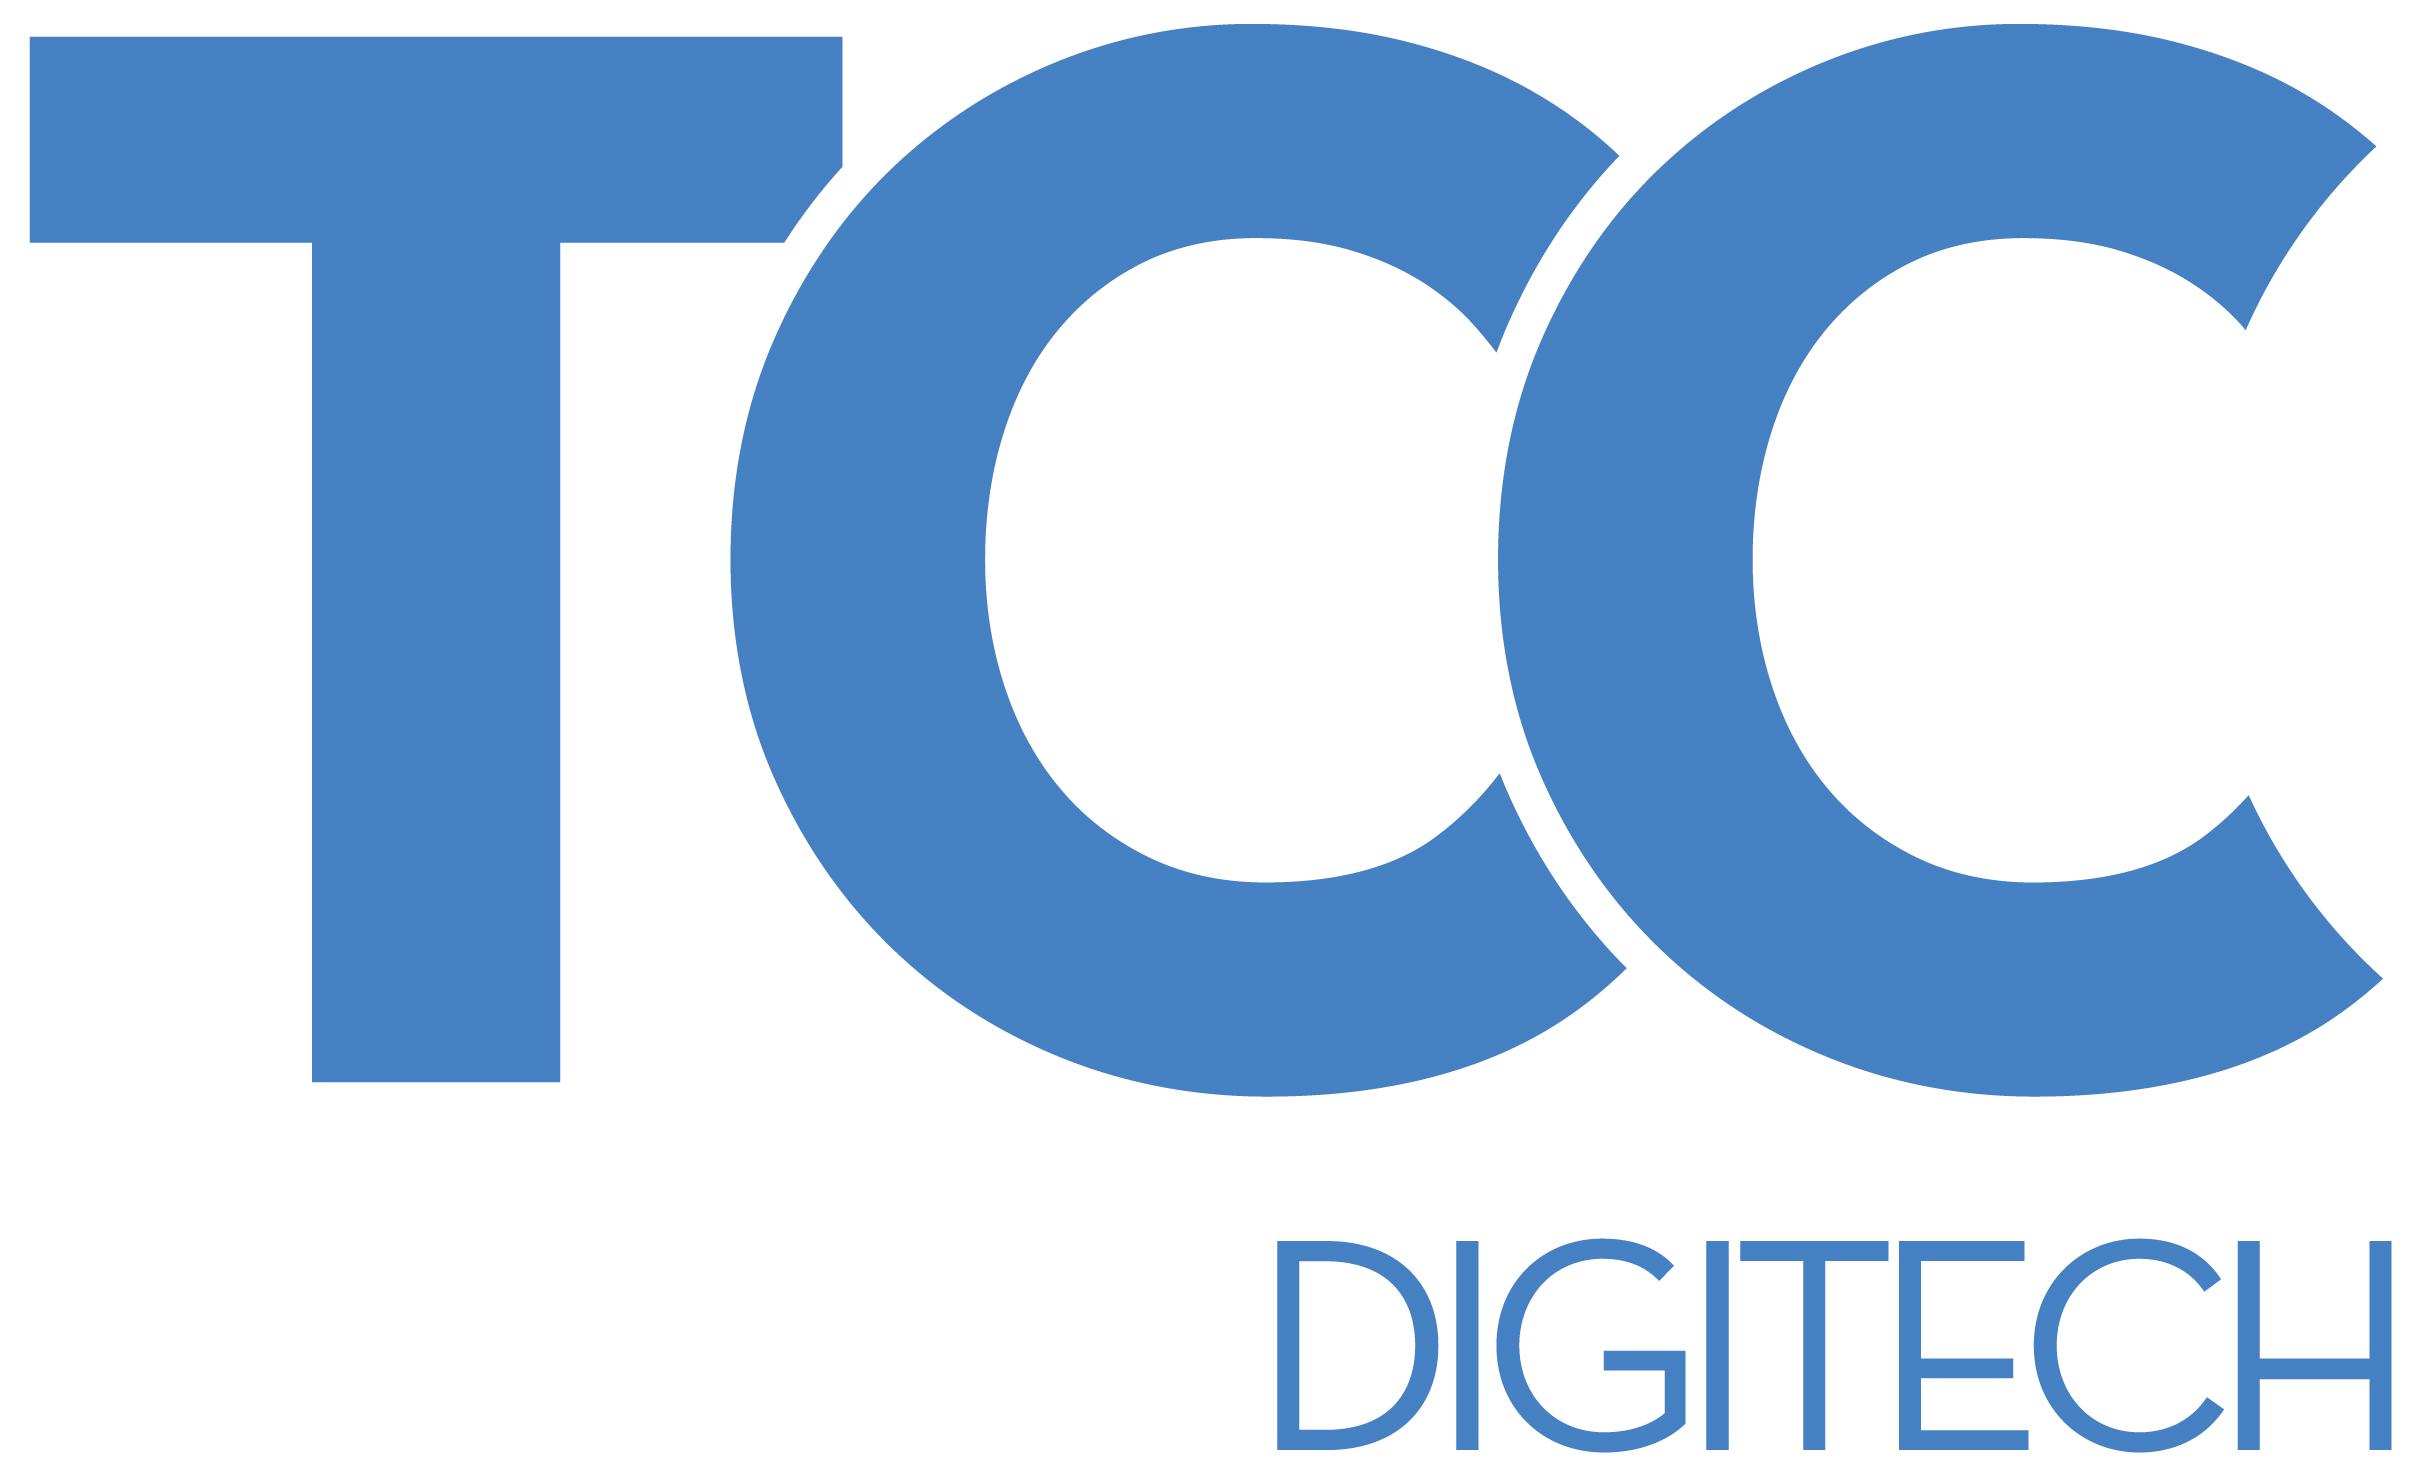 TCC Digitech - Best Digital Marketing Agency in Delhi profile on Qualified.One